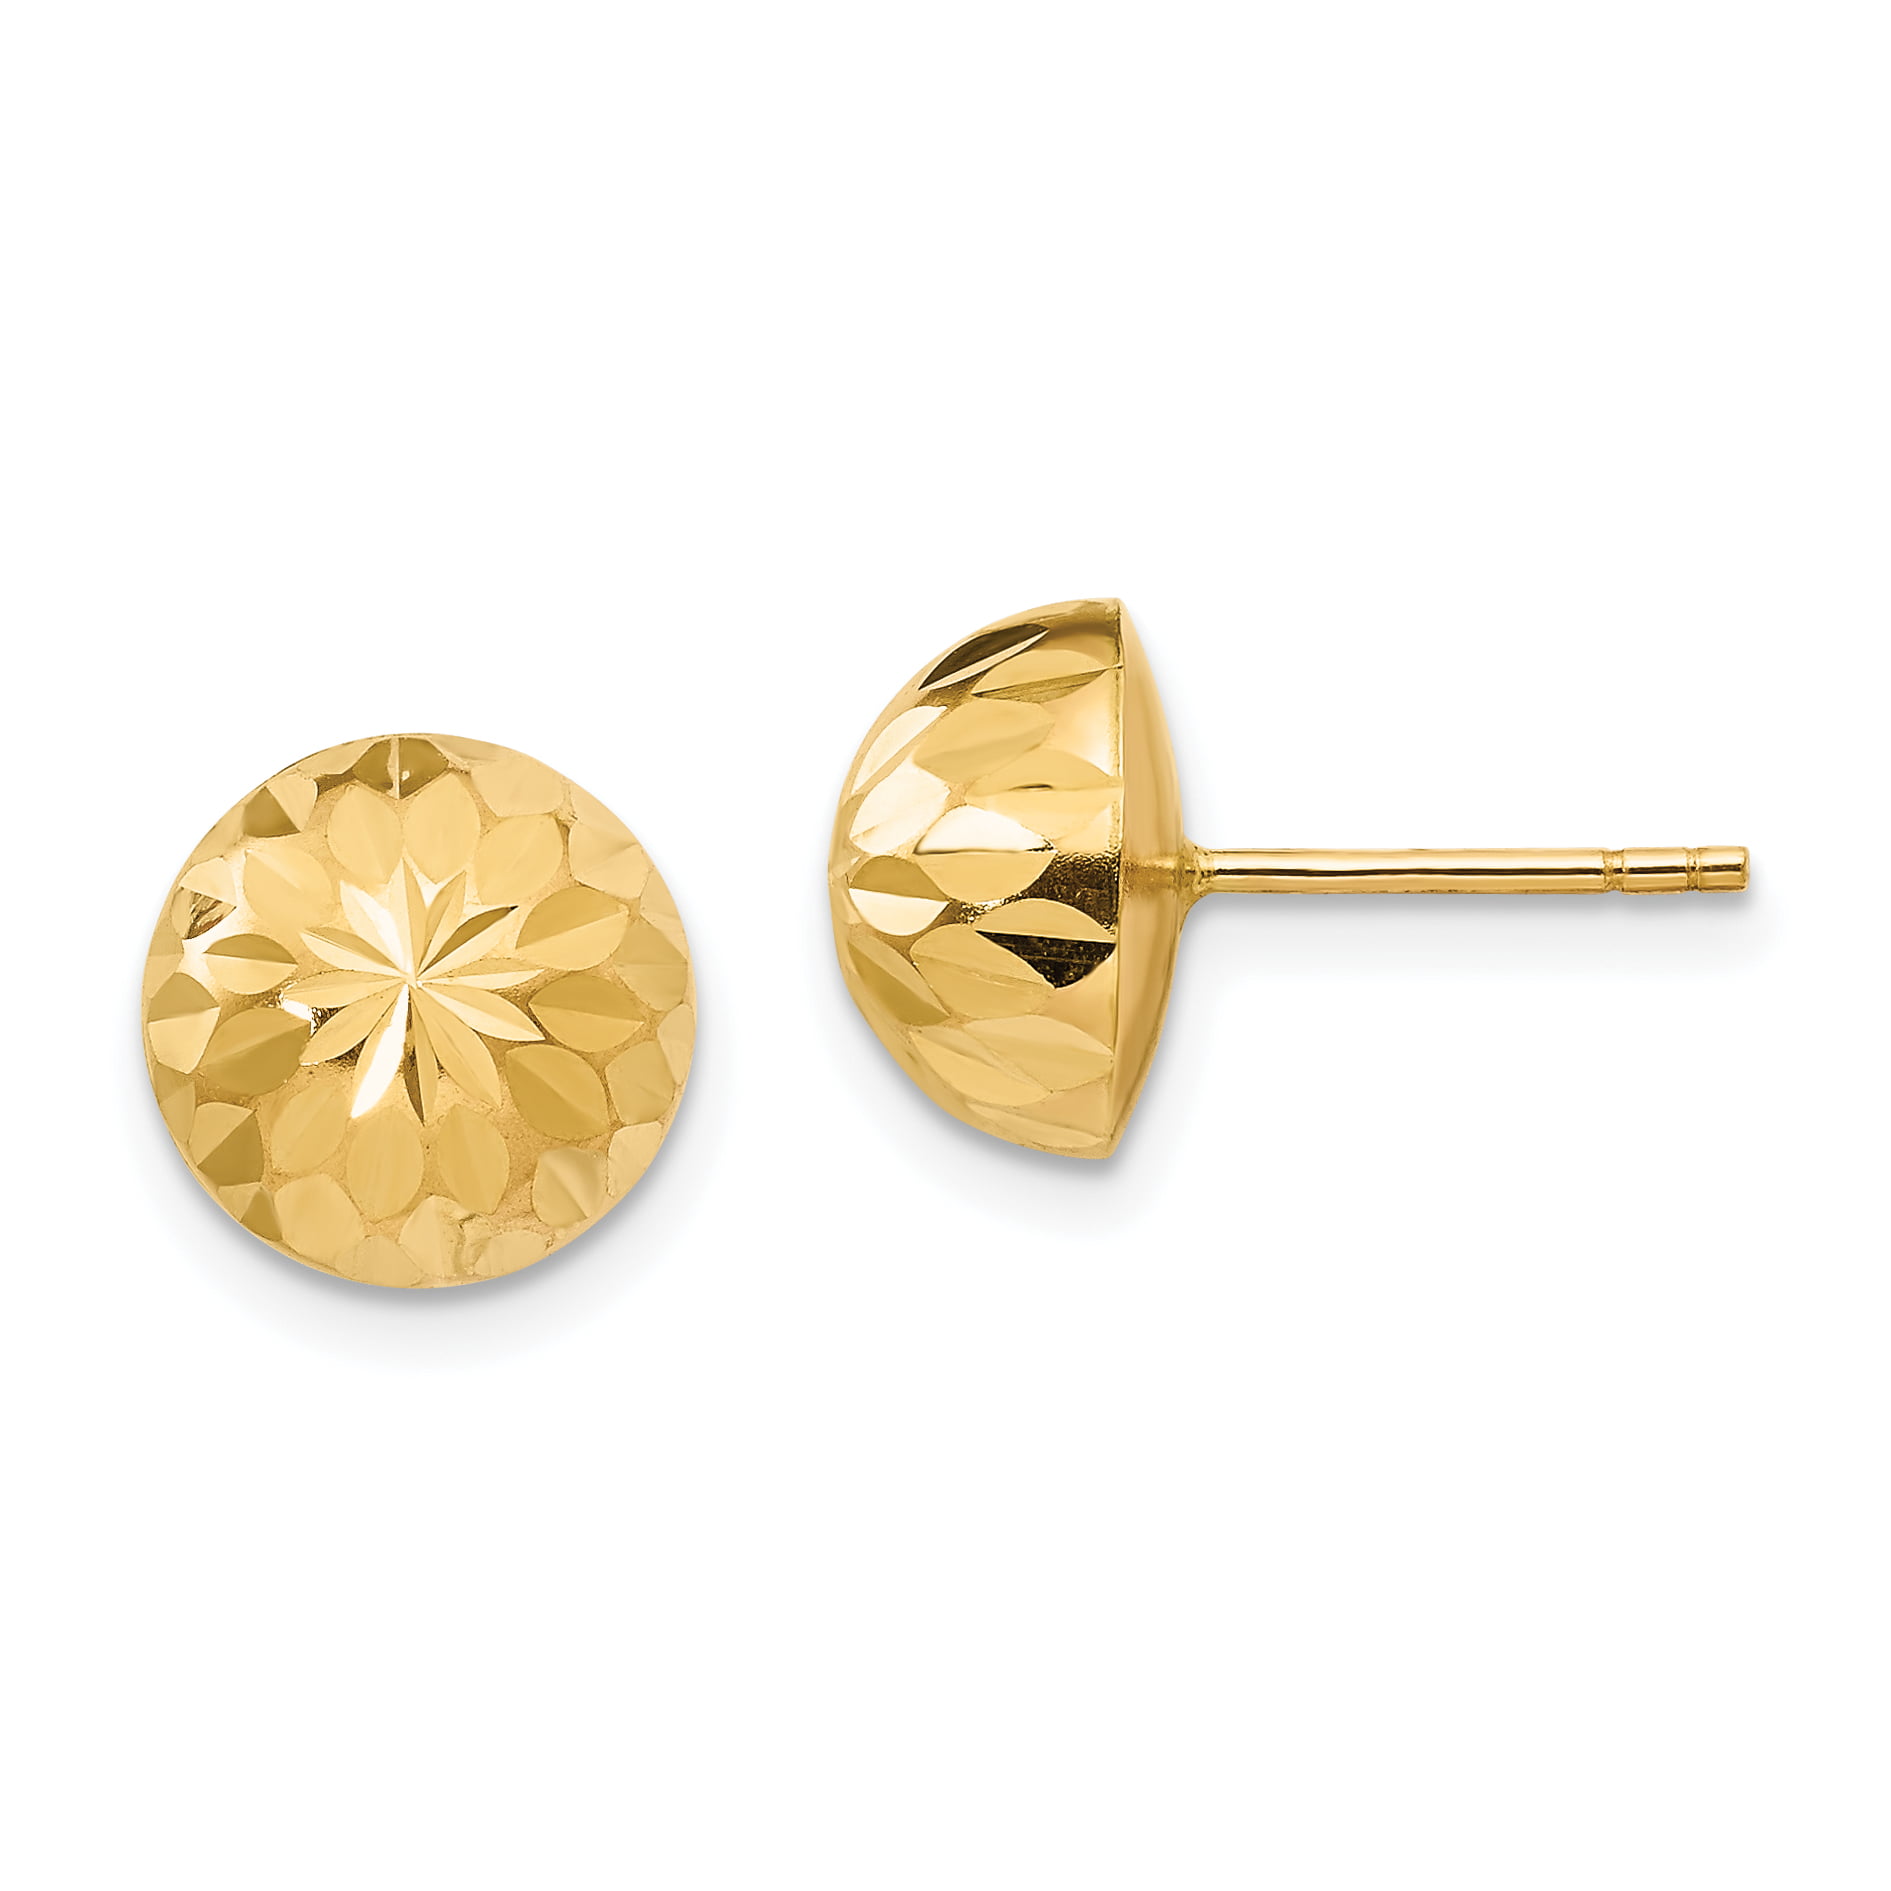 14k Yellow Gold Diamond-Cut Round Button Post Earring Push Back Clasp 10mm 